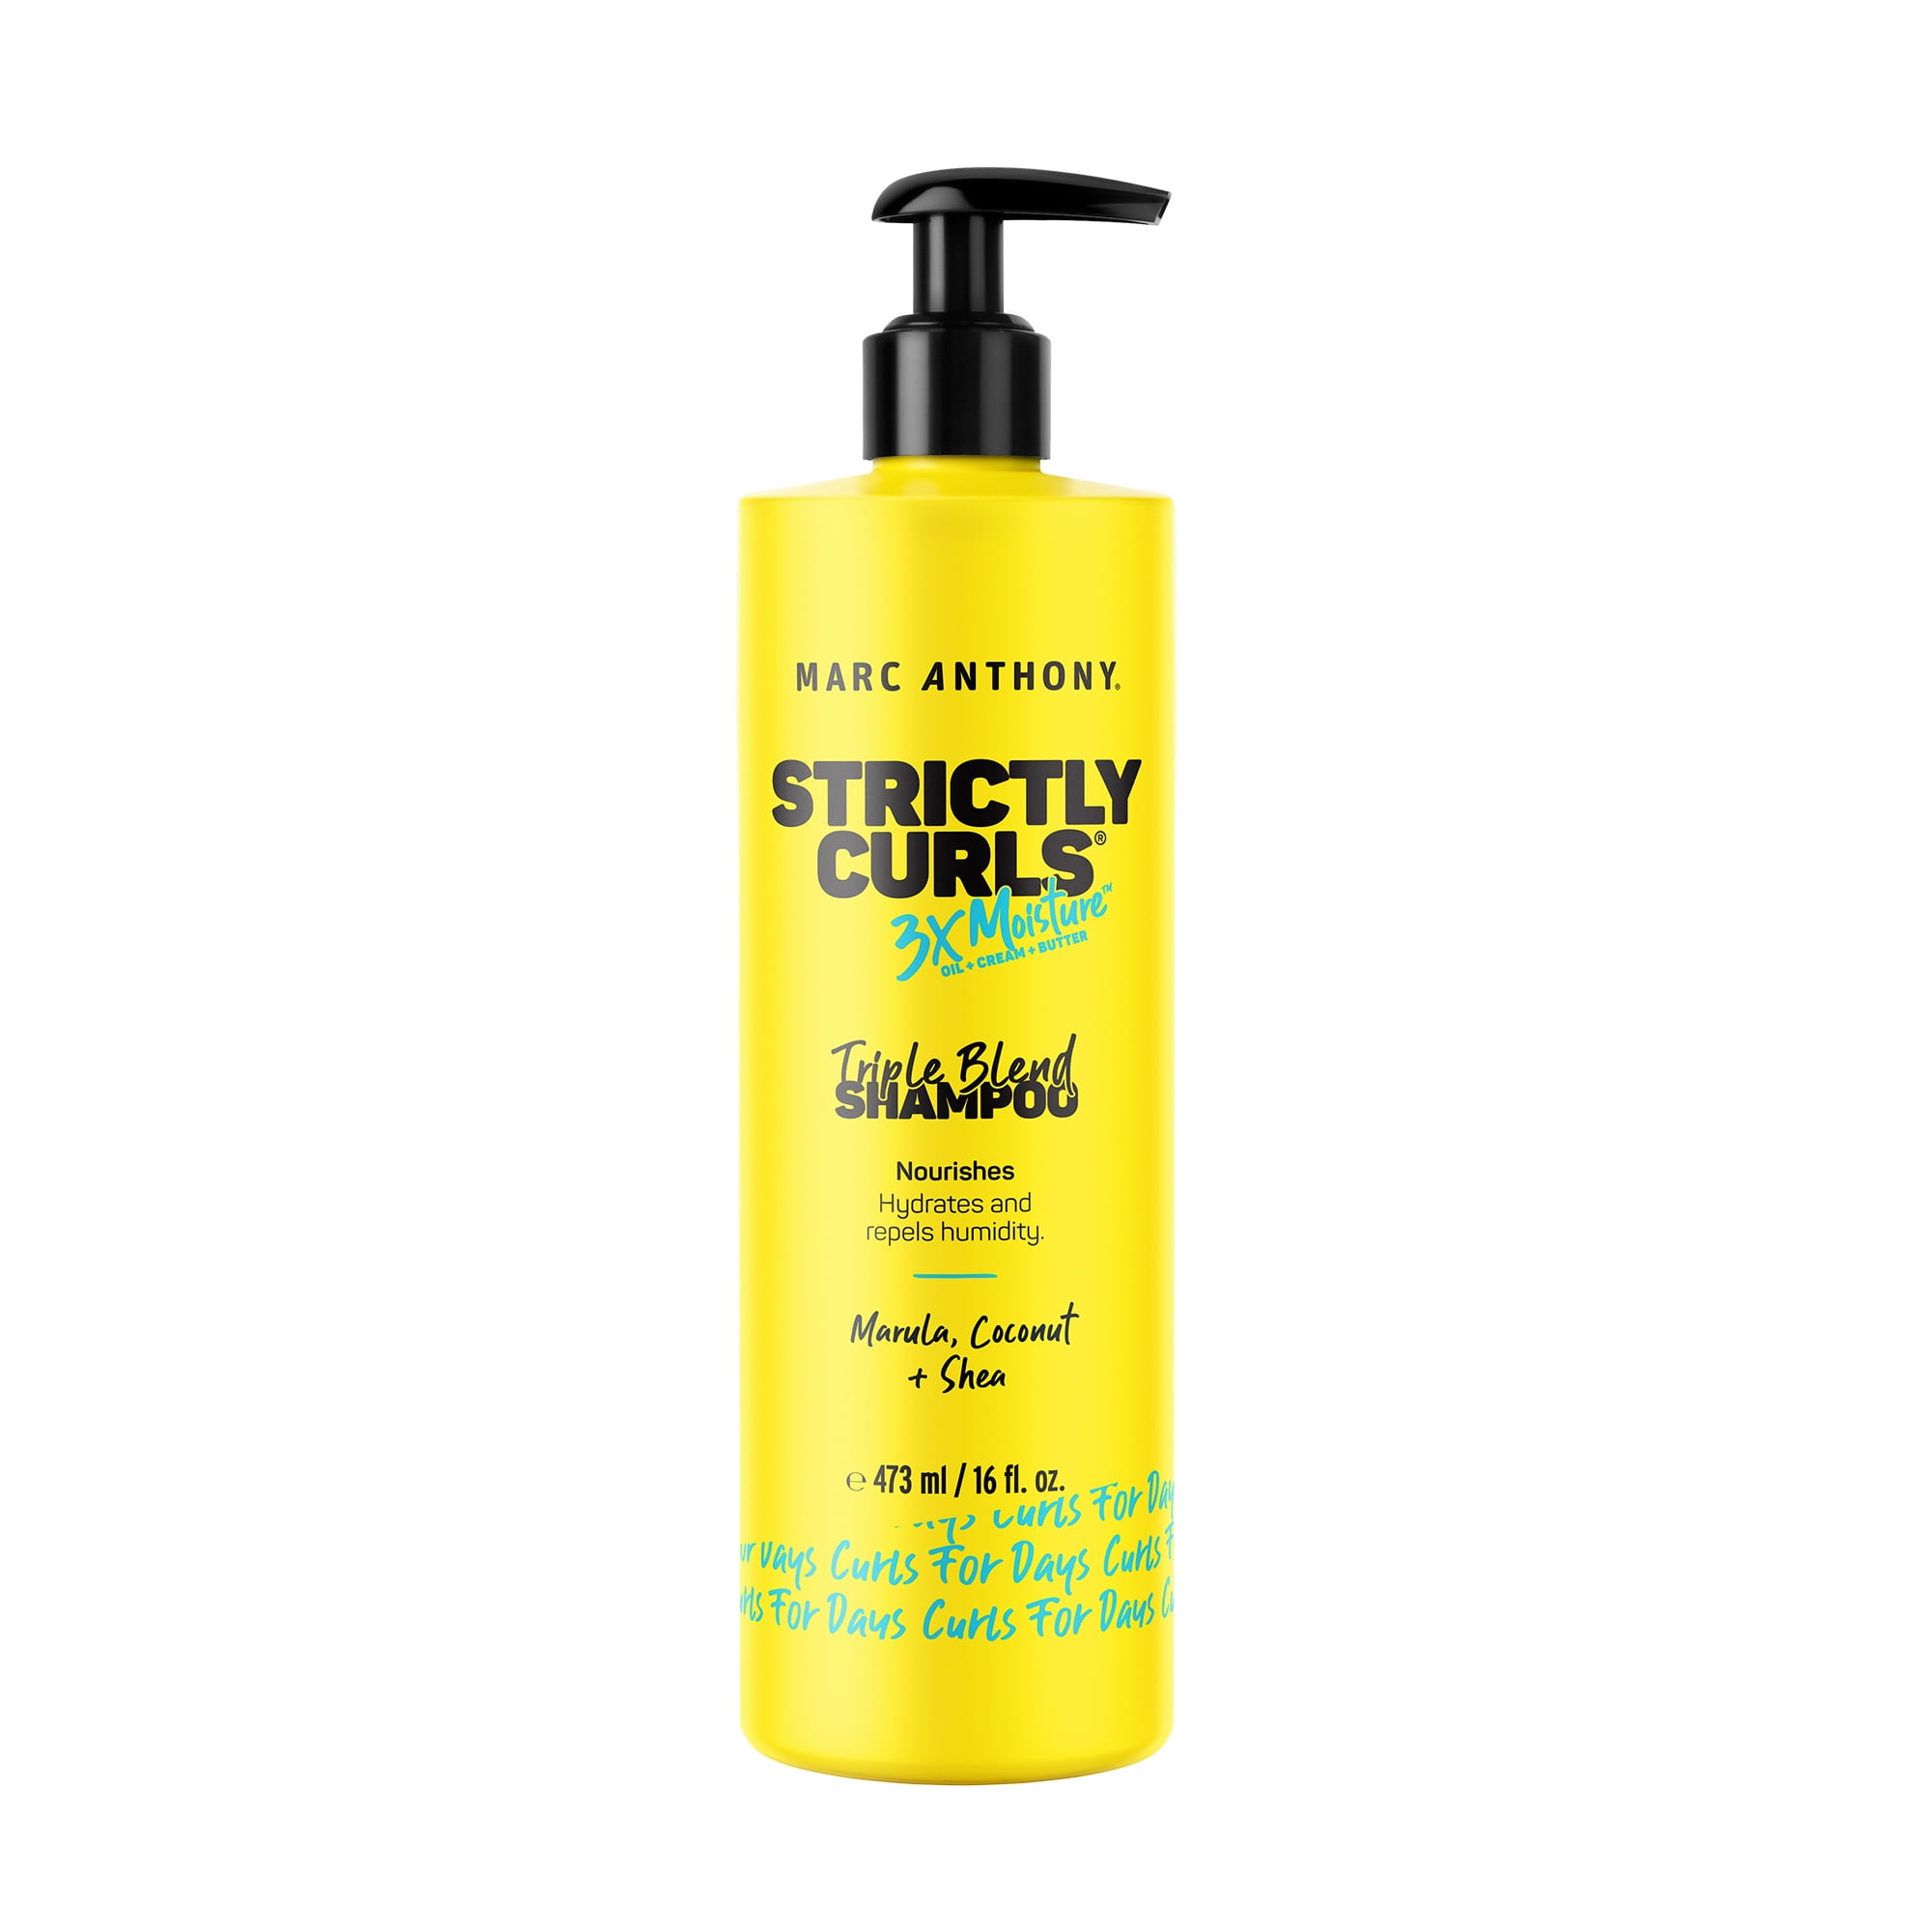 svale Stillehavsøer svinge Marc Anthony Strictly Curls 3x Moisture Triple Blend Shampoo, 16 oz -  Walmart.com